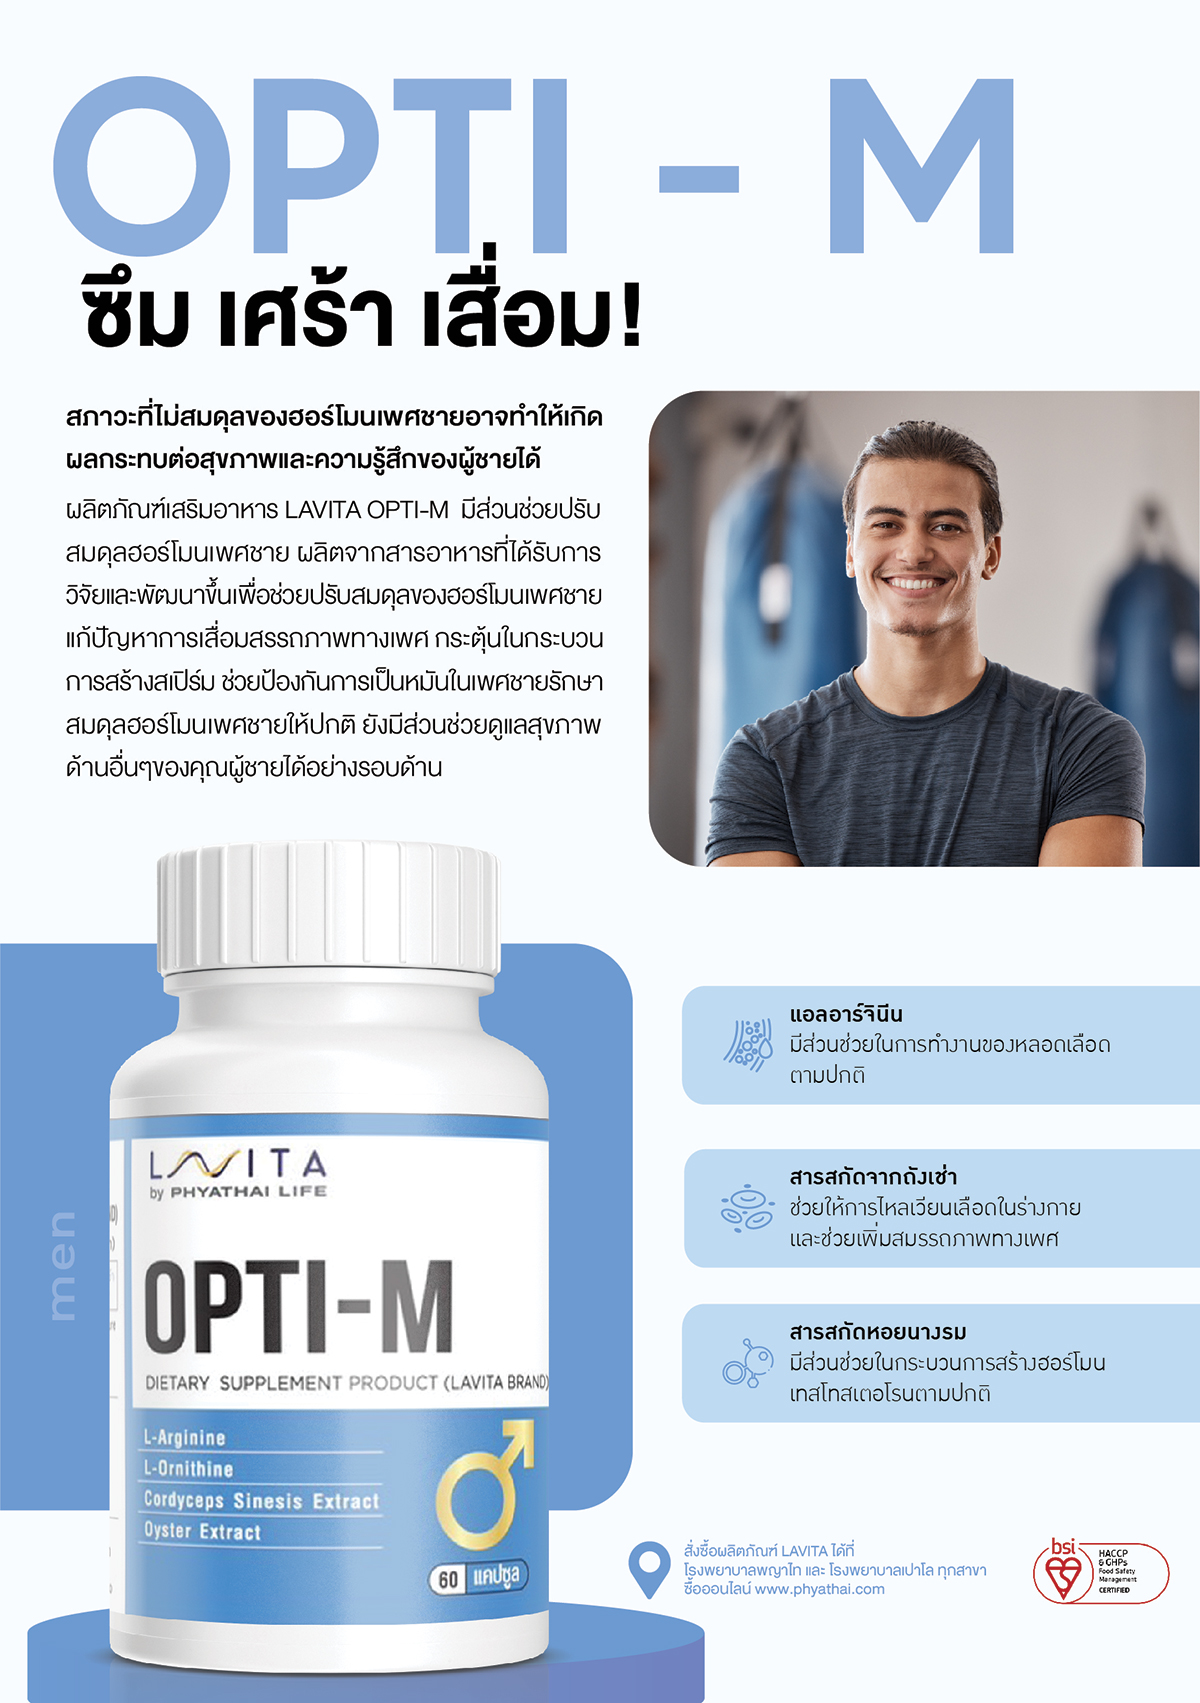 OPTI-M มีส่วนช่วยในกระบวนการสร้างฮอร์โมนเทสโทสเตอโรนตามปกติ